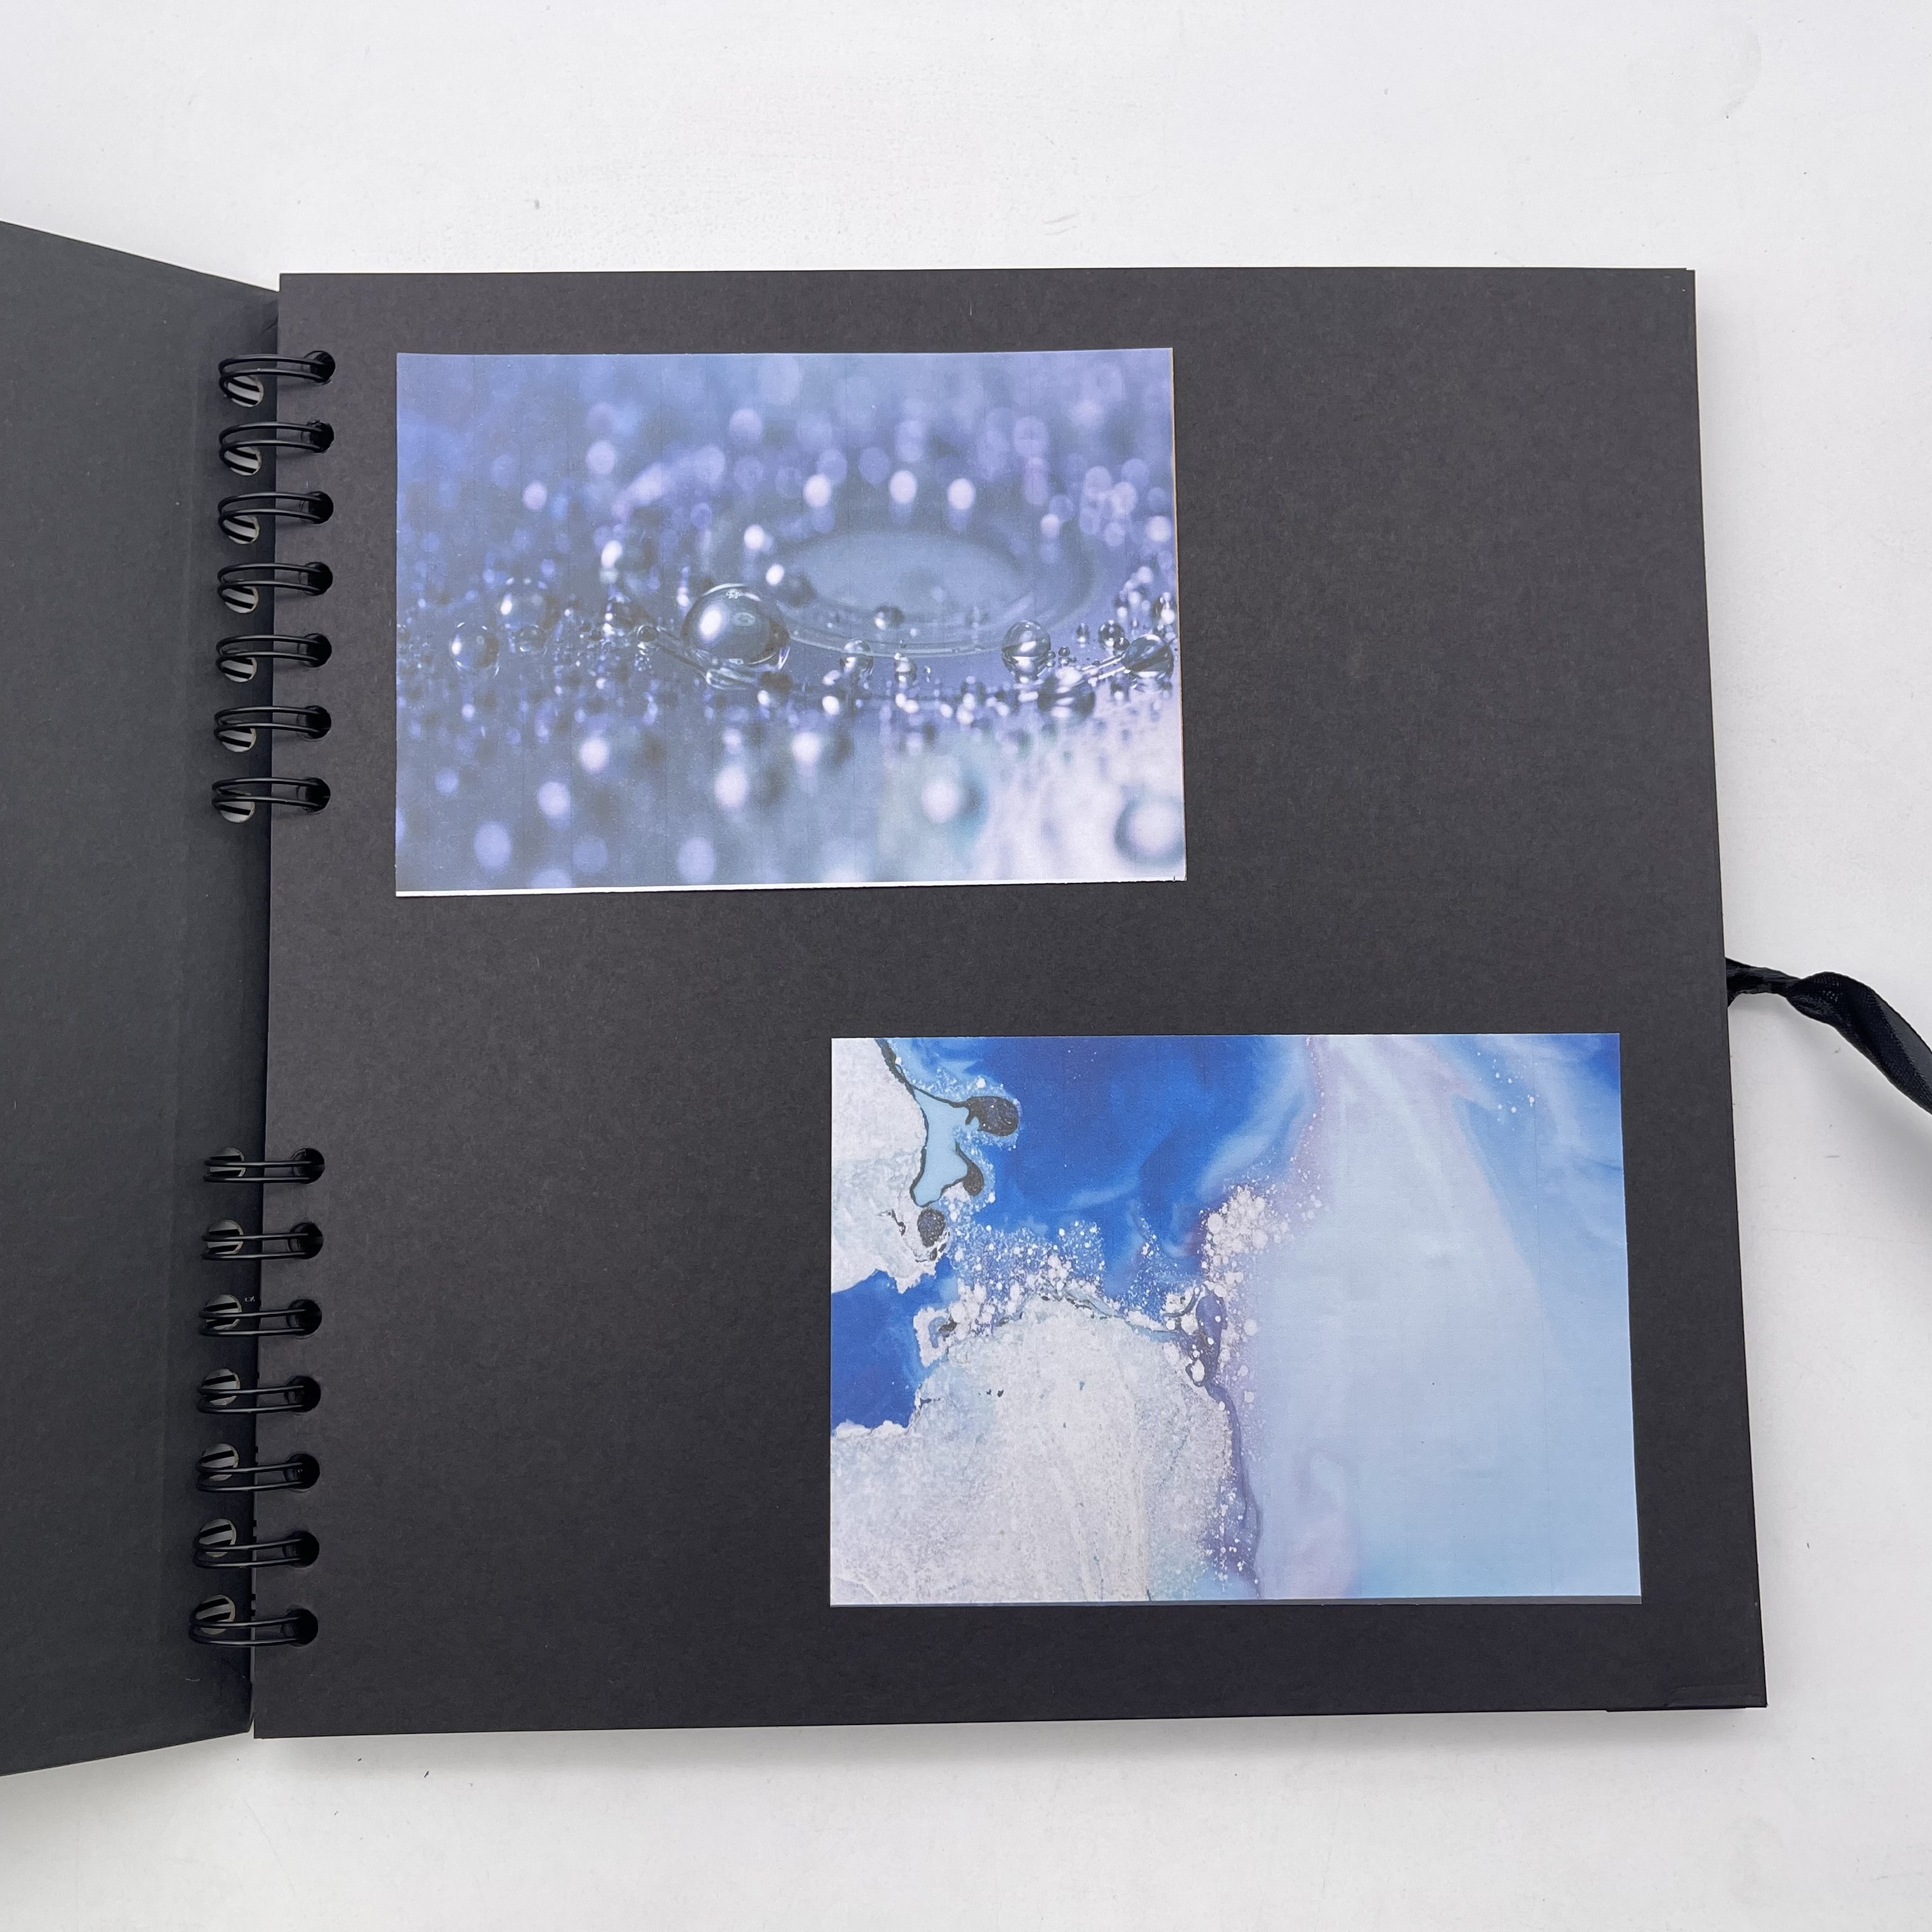 Scrapbook Photo Album - 8 x 8 inch, 60 Pages, Kraft Paper, Ribbon, Corner  Protectors, Suitable for Travel, Graduation, Memories